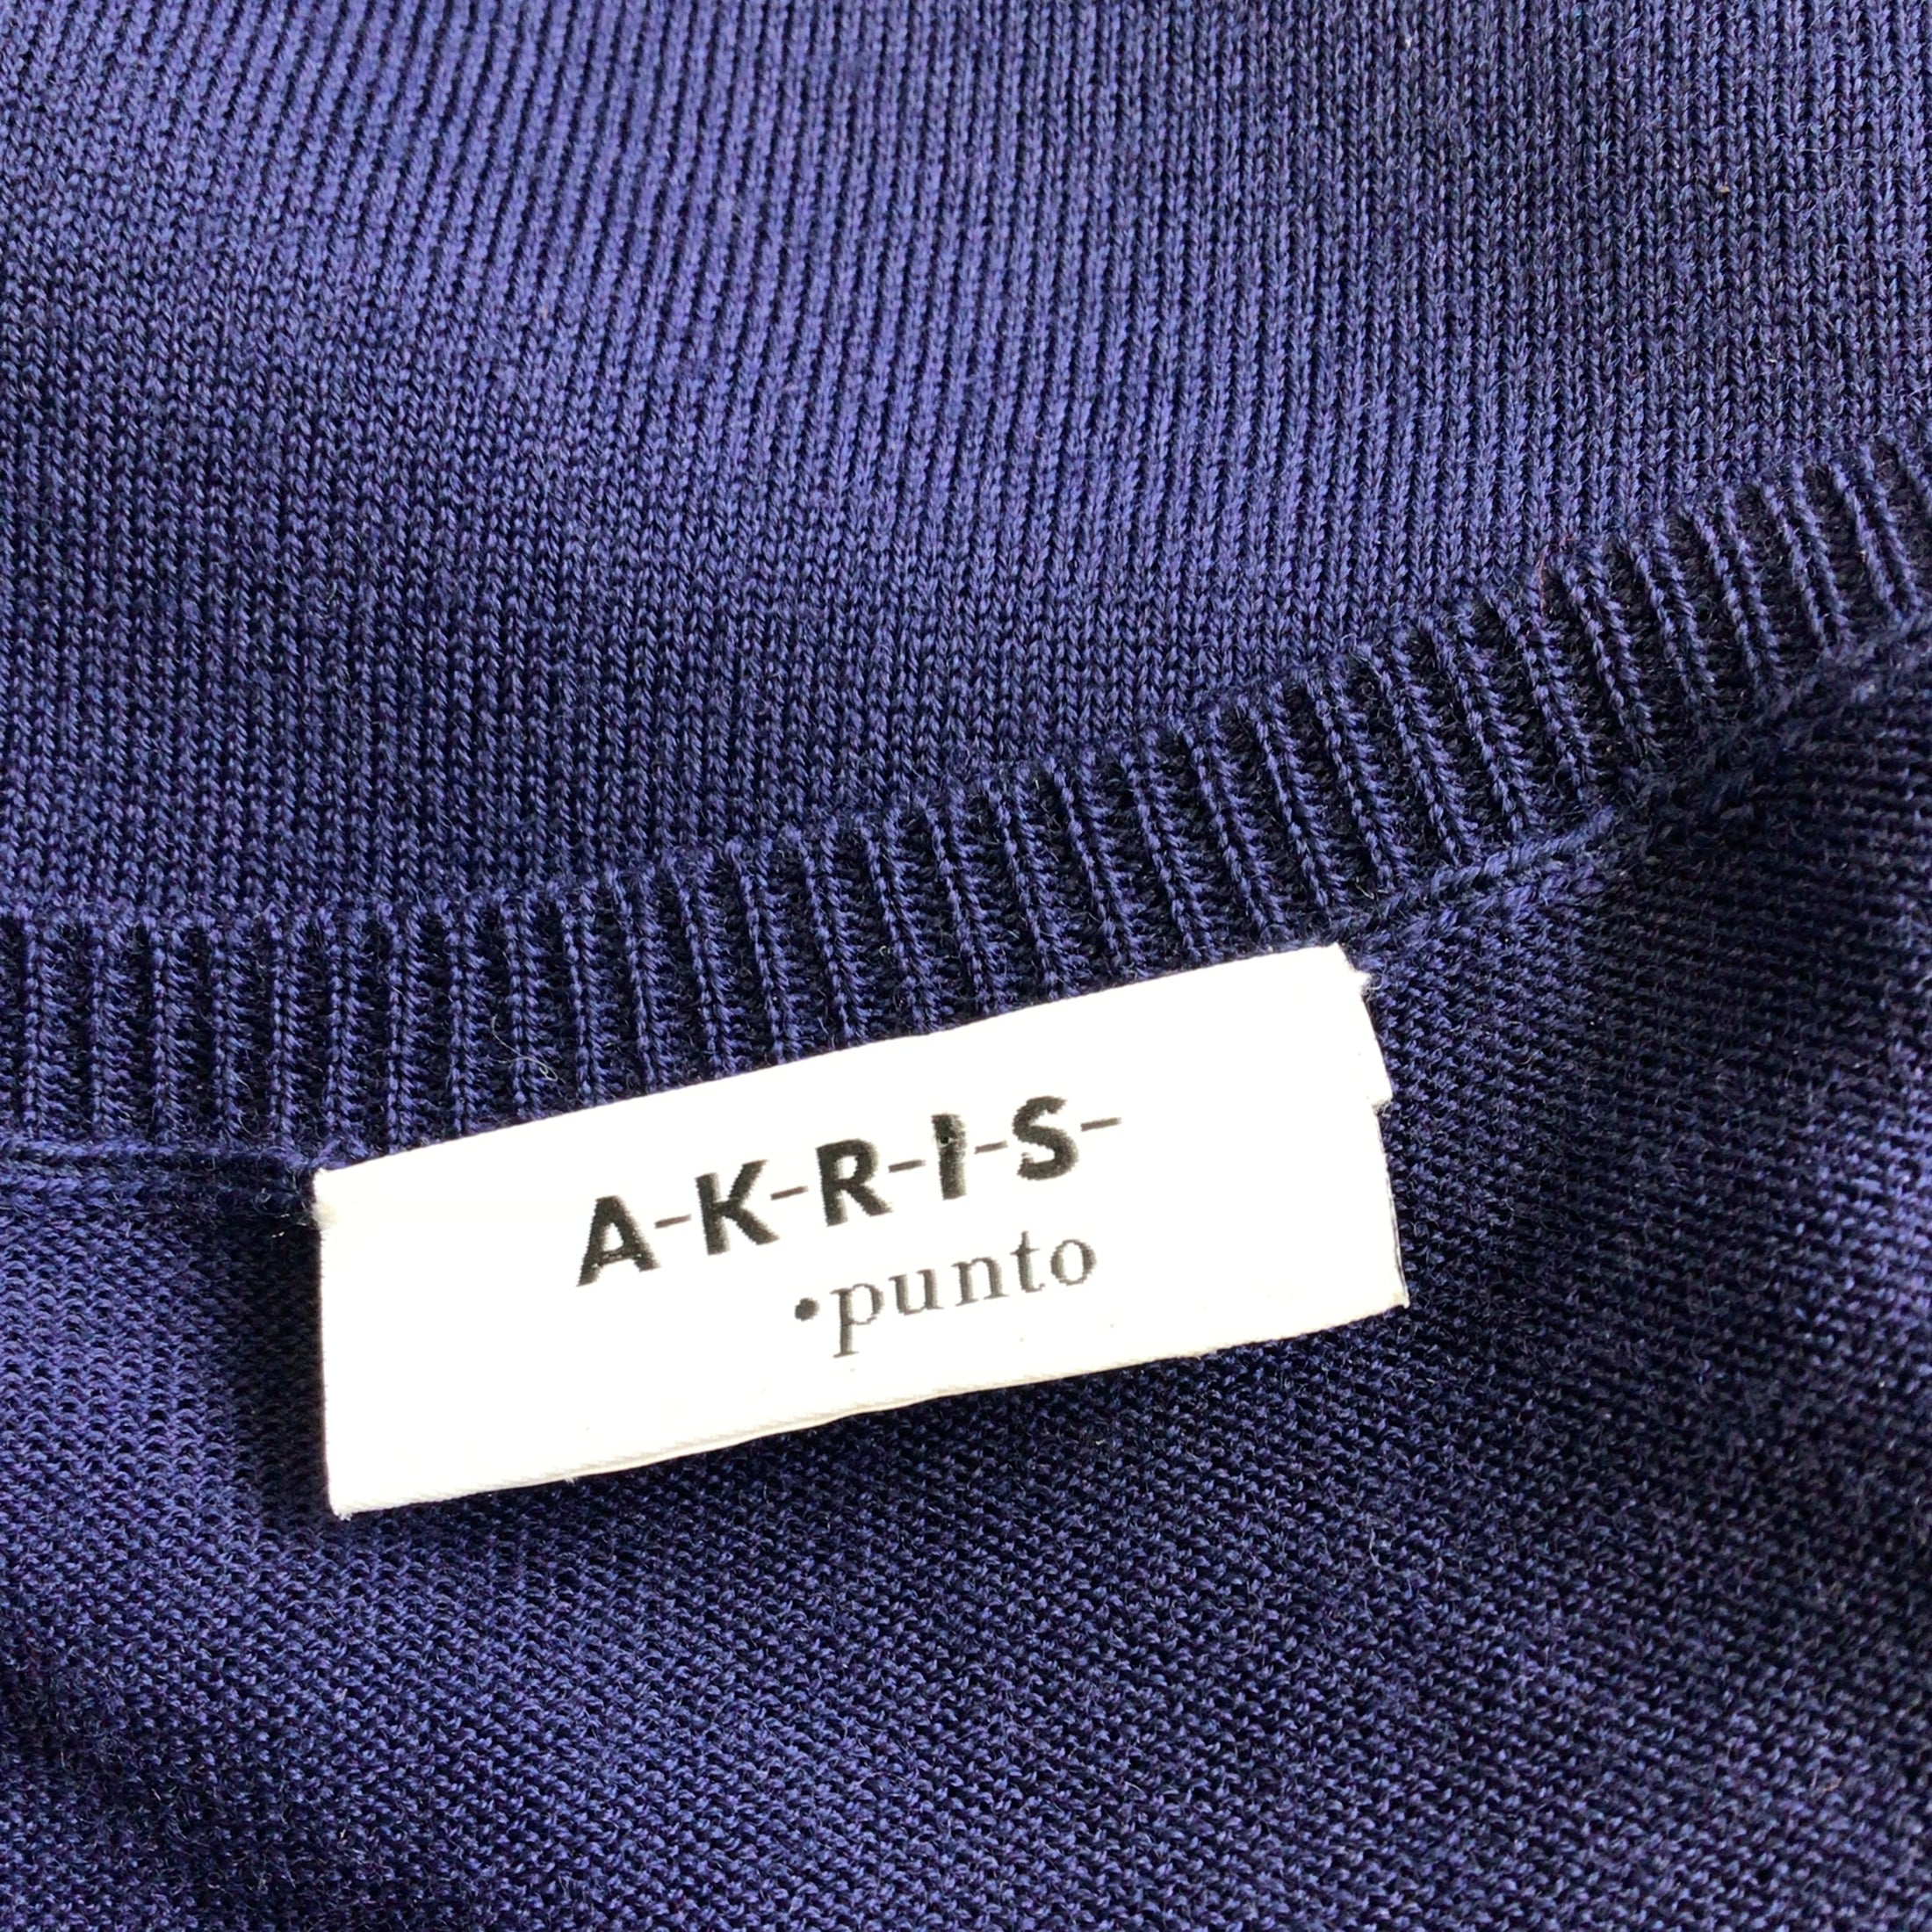 Akris Punto Navy Blue / Light Blue Wool Knit Cardigan Sweater and Tank Top Two-Piece Set